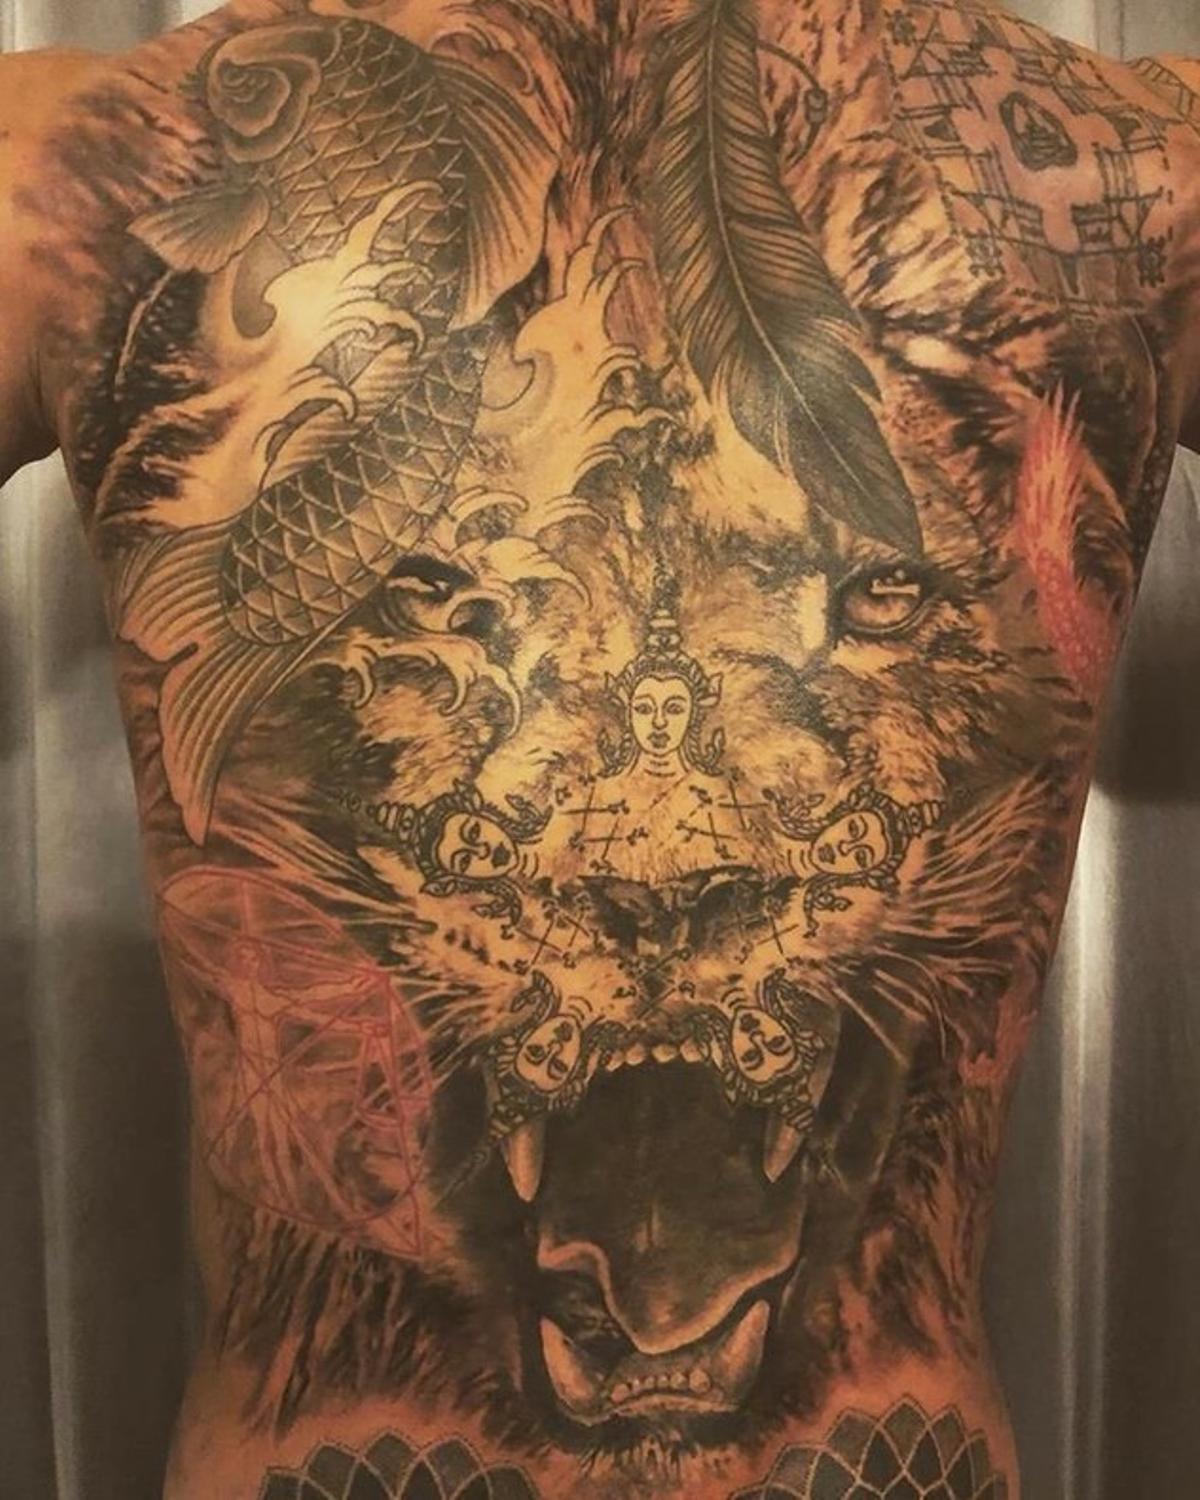 Nuevo tatuaje de Zlatan Ibrahimovic.